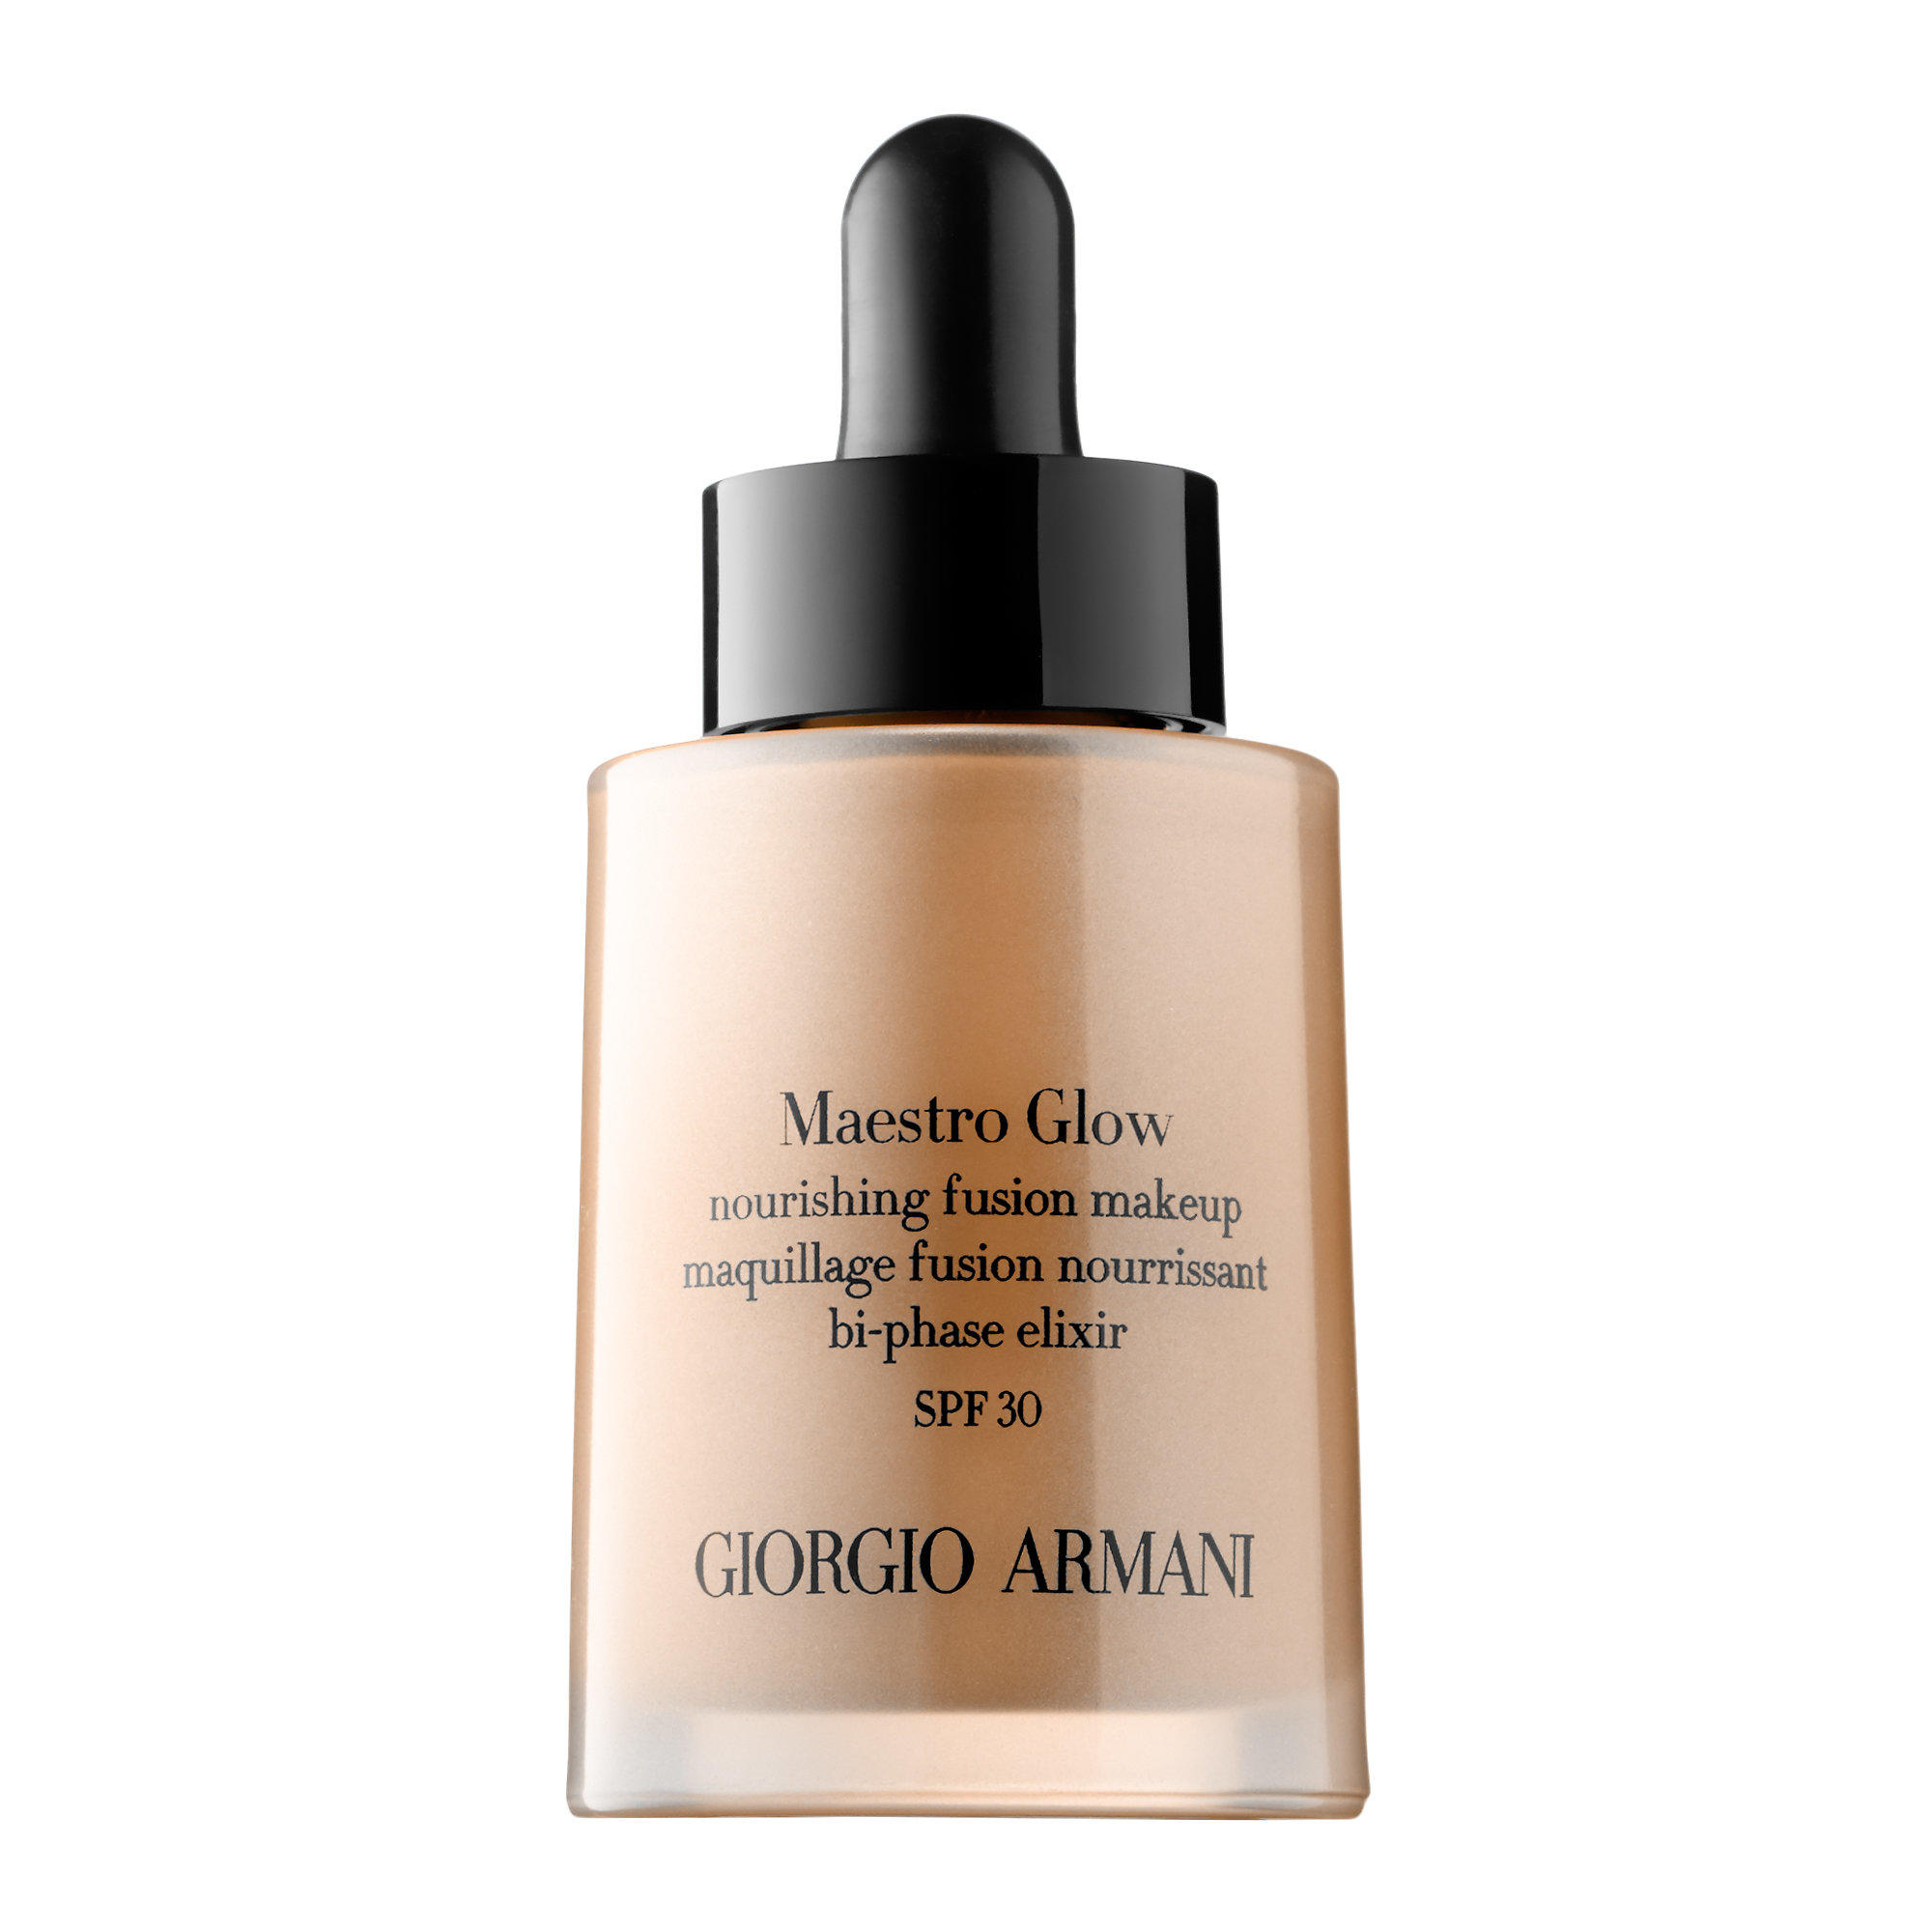 Giorgio Armani Maestro Glow Nourishing Fusion Makeup 4